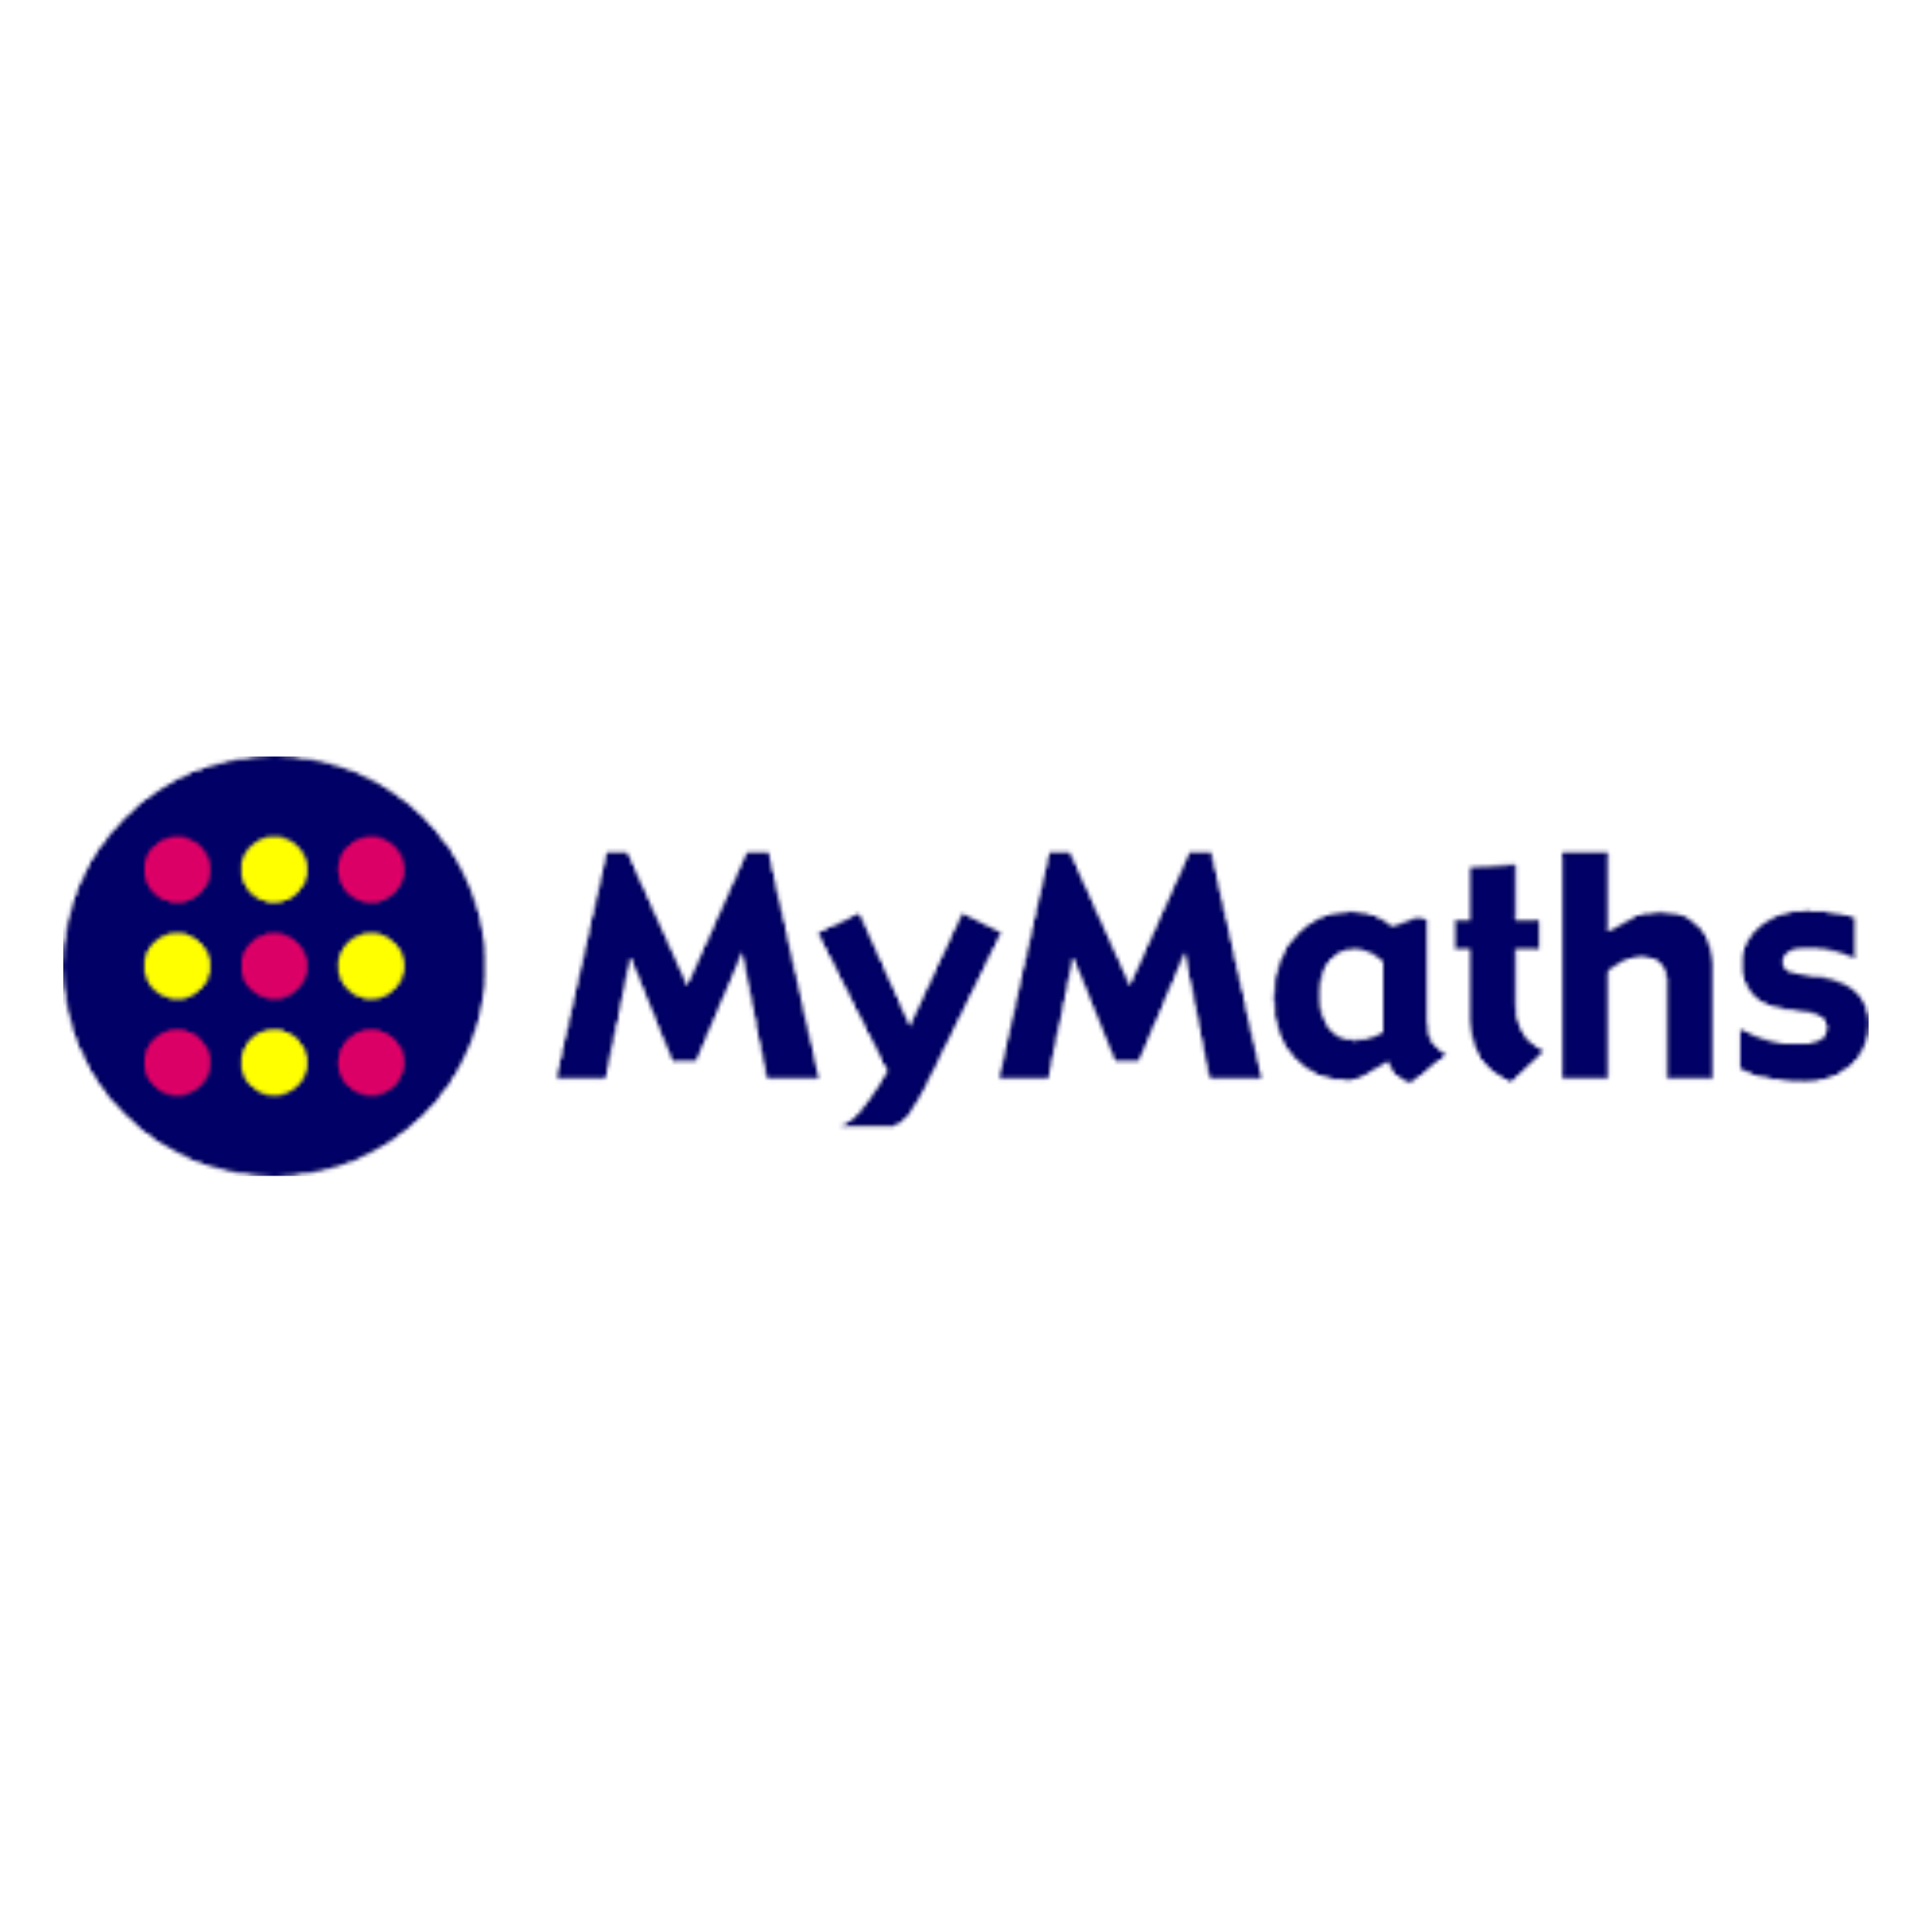 MyMaths Resized